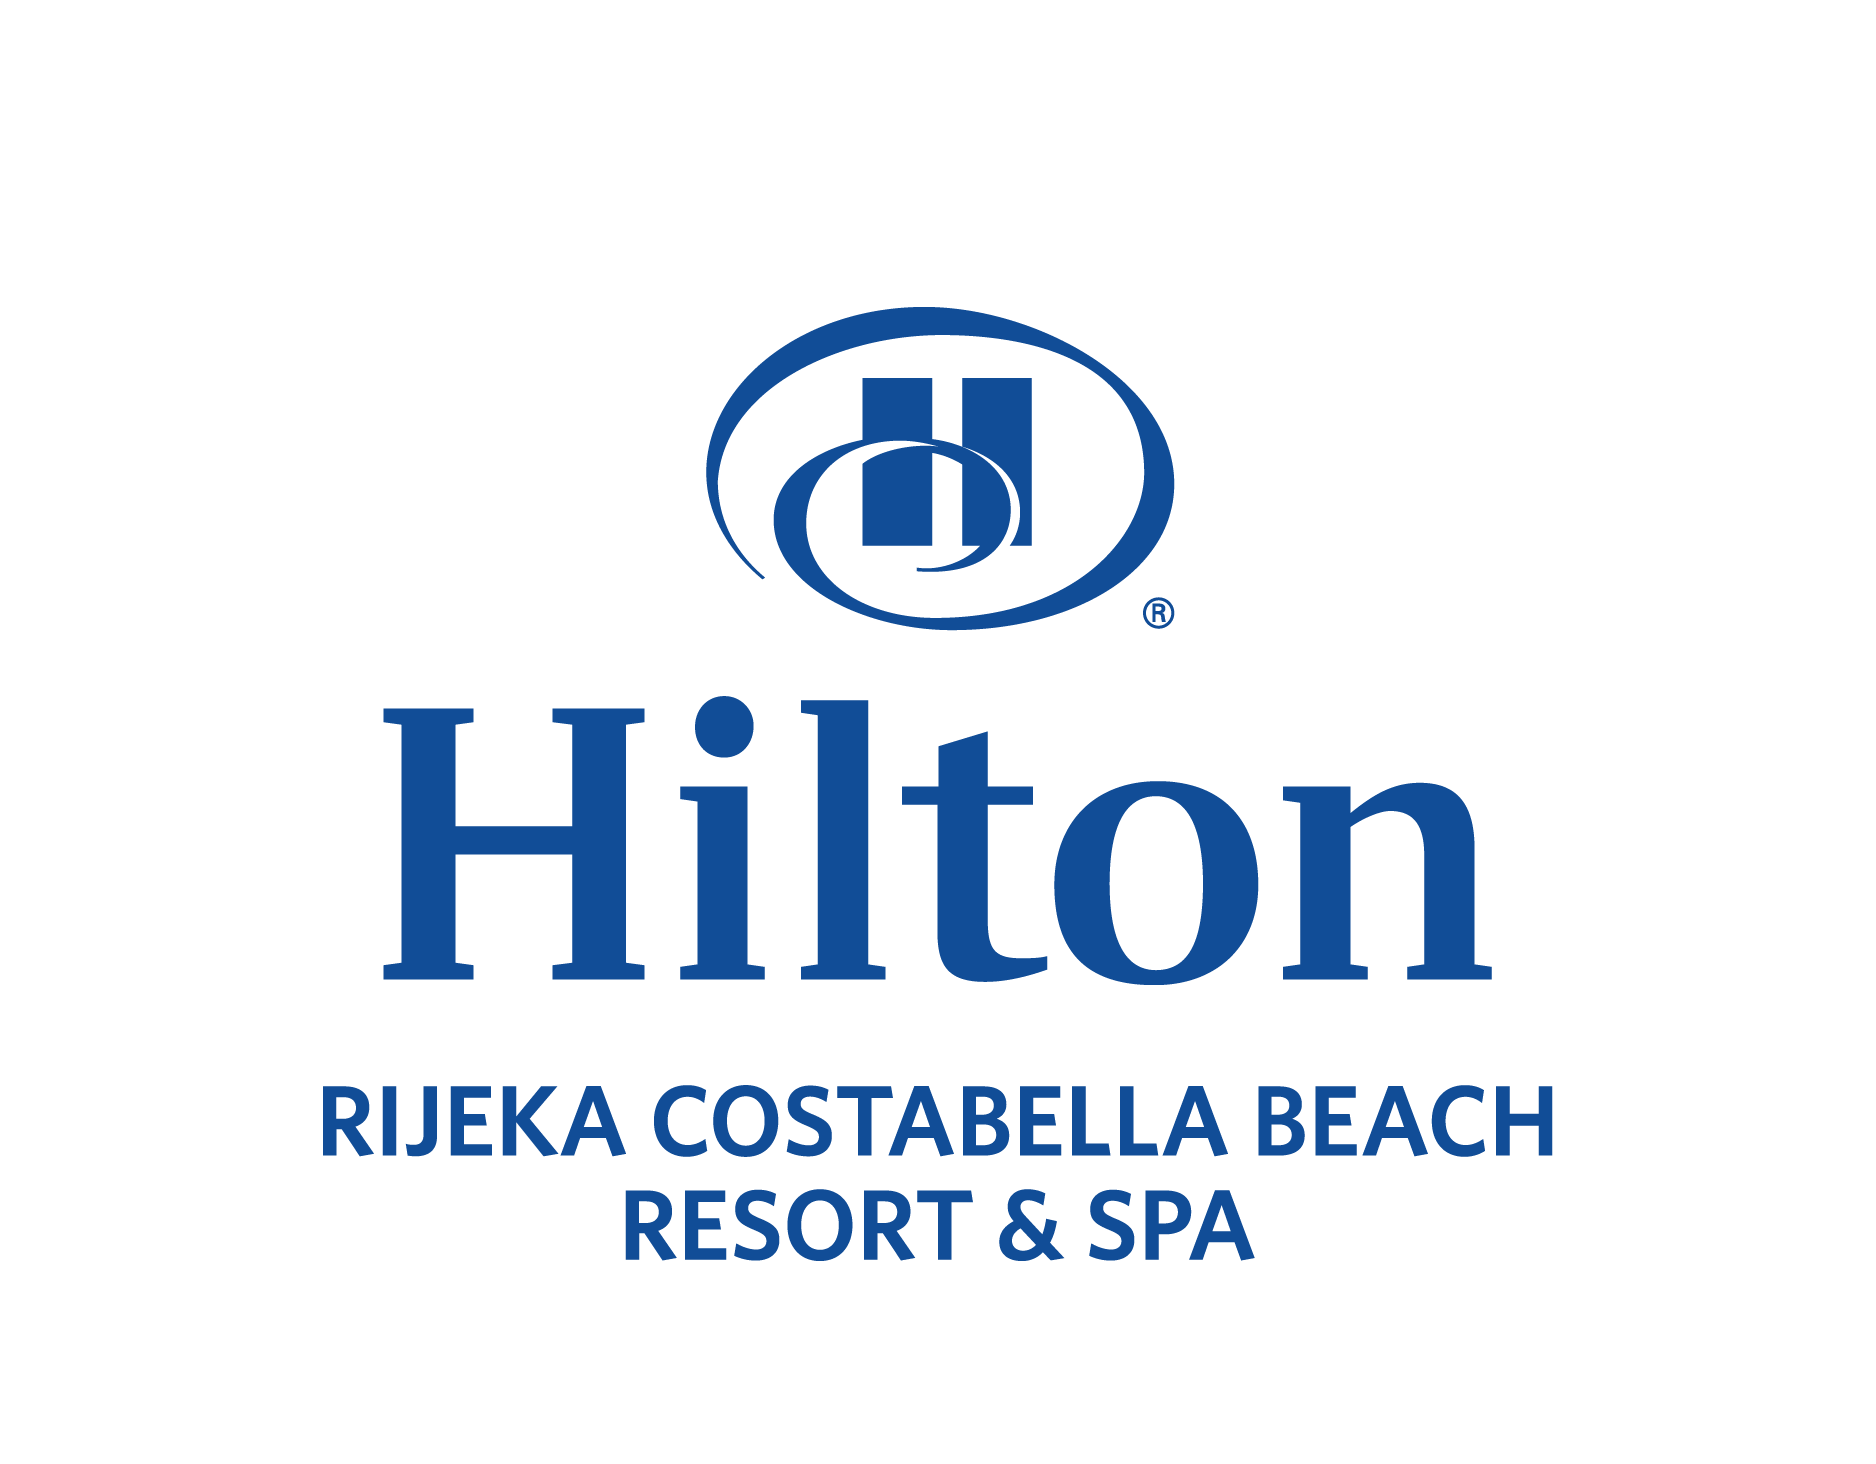 Suradnja DIP-a i Hotel Hilton Costabella sve je produktivnija! Prosinac u Hotel Hiltonu s “DIP-ovcima“!